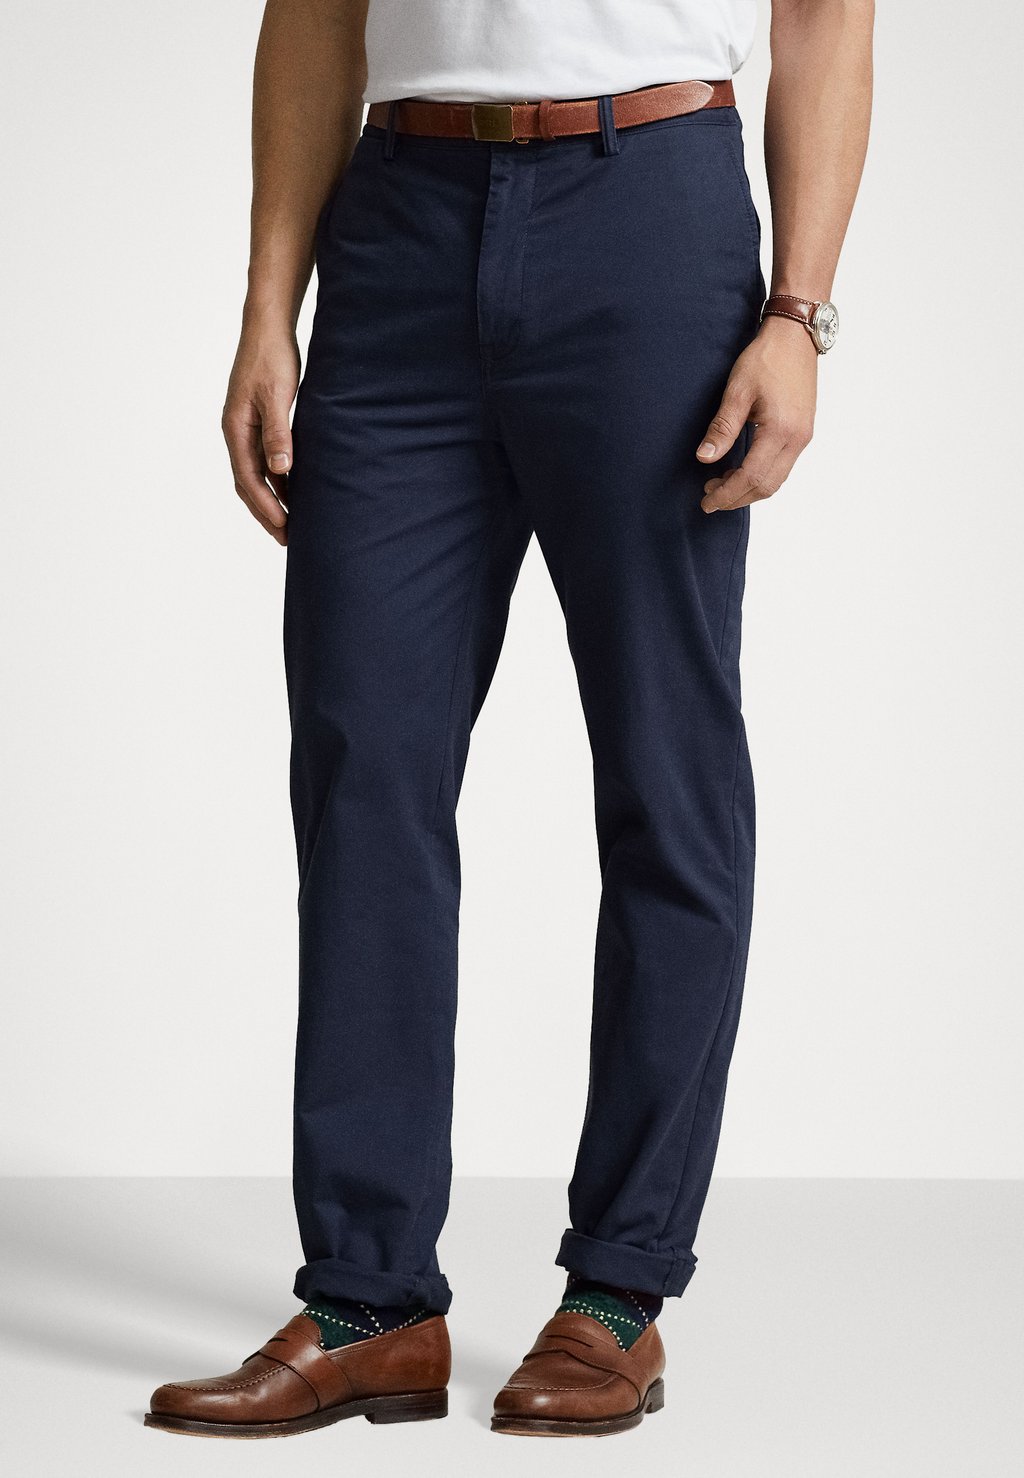 Чинос Polo Ralph Lauren Big & Tall, темно-синий детские брюки 134 176 см polo ralph lauren темно синий